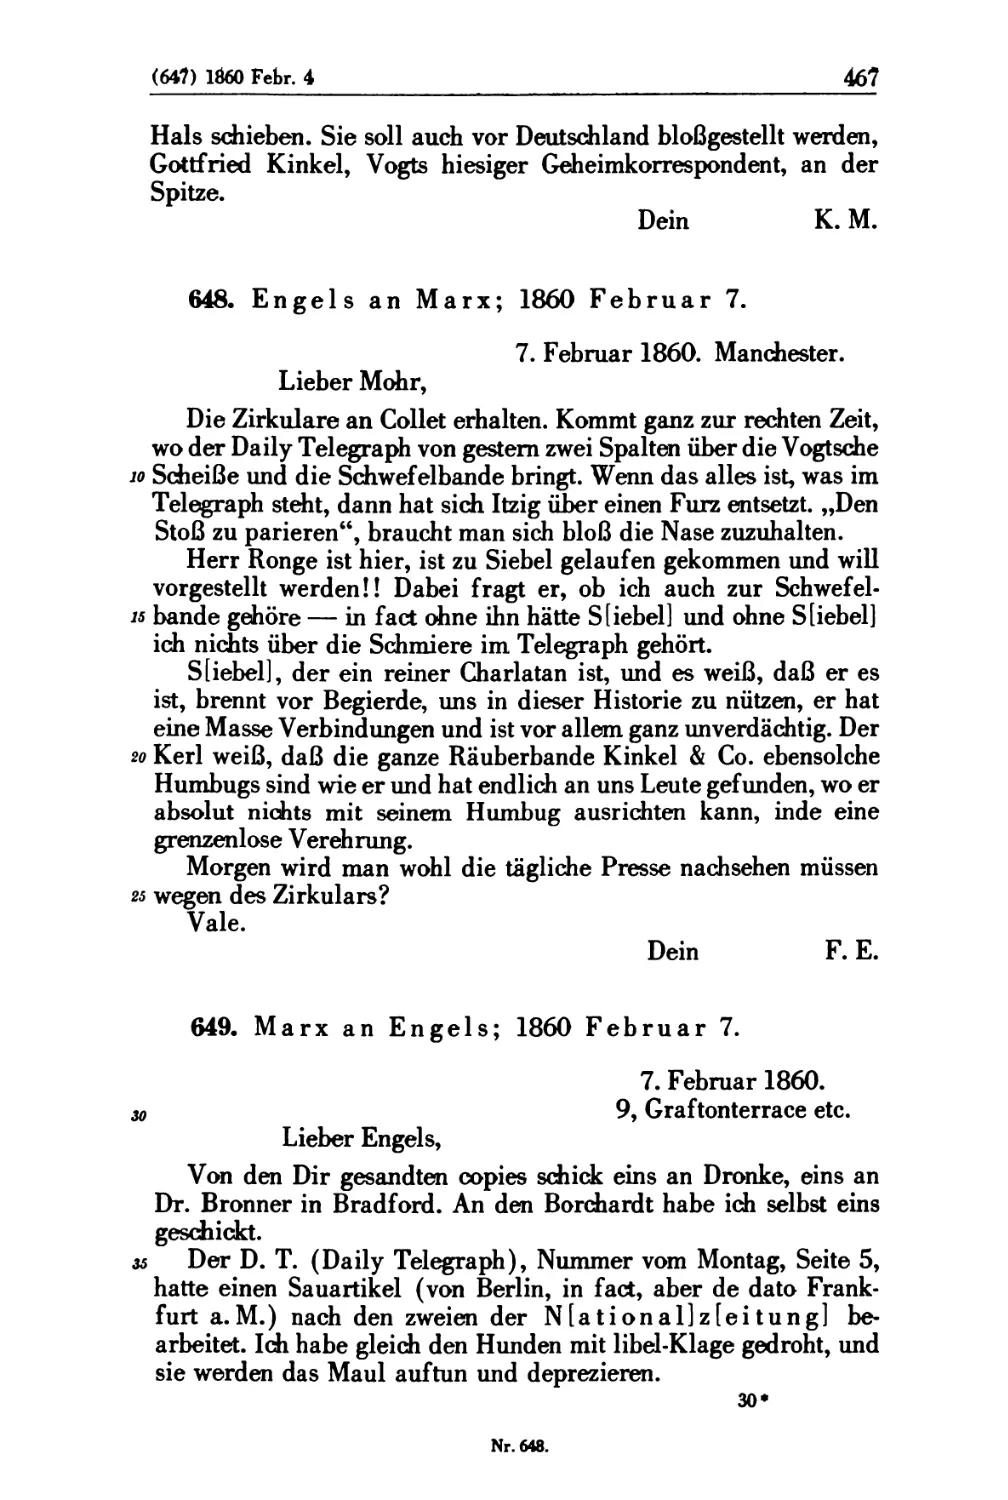 648. Engels an Marx; 1860 Februar 7
649. Marx an Engels; 1860 Februar 7